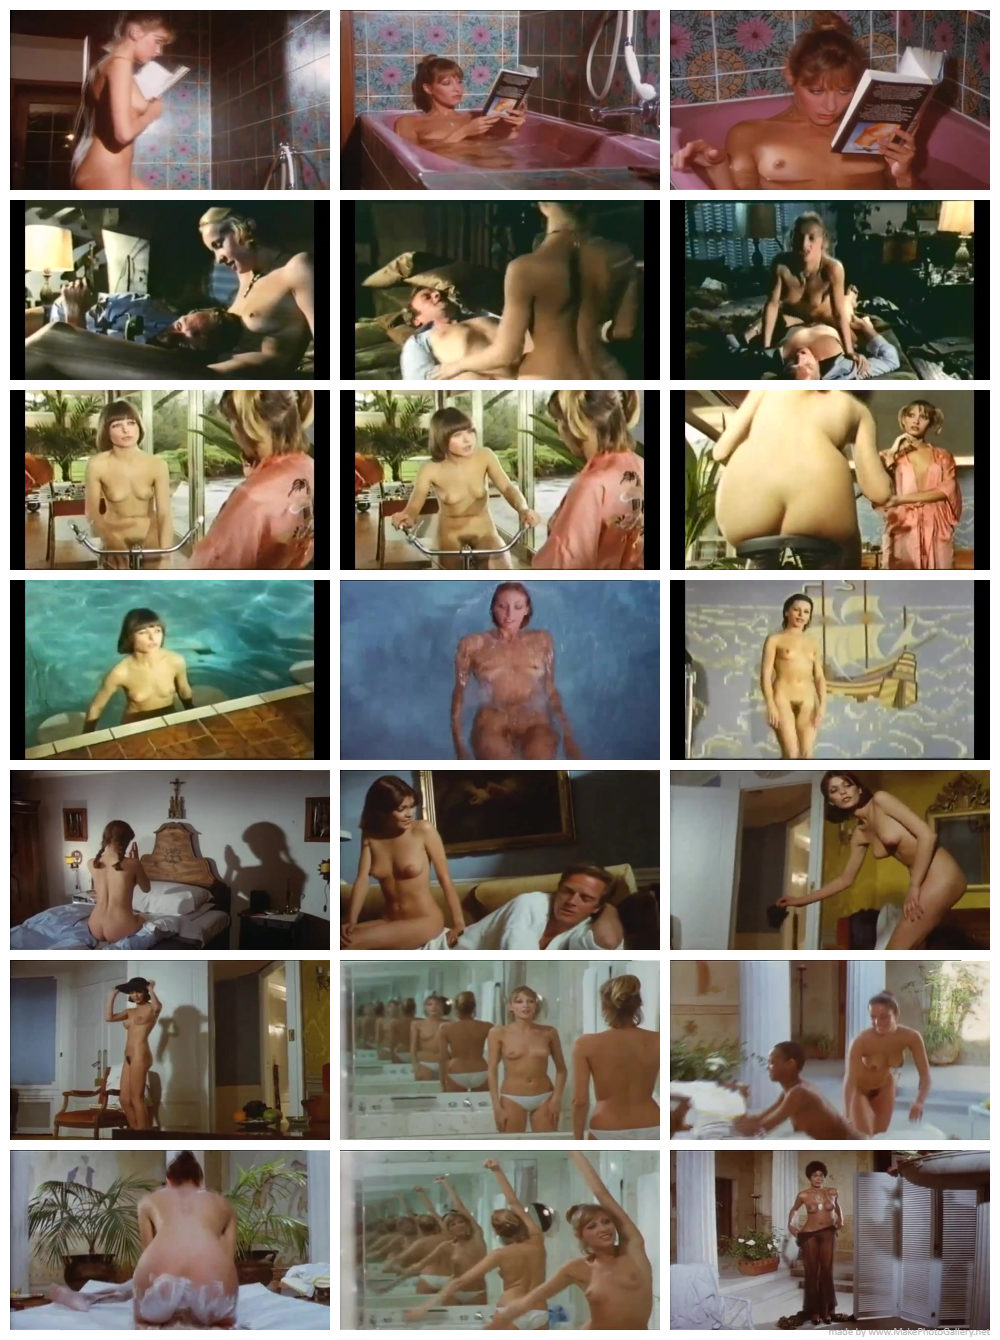 Sylvia im Reich der Wollust (Joy of Flying) (1977) EroGarga Watch Free Vintage Porn Movies, Retro Sex Videos, Mobile Porn